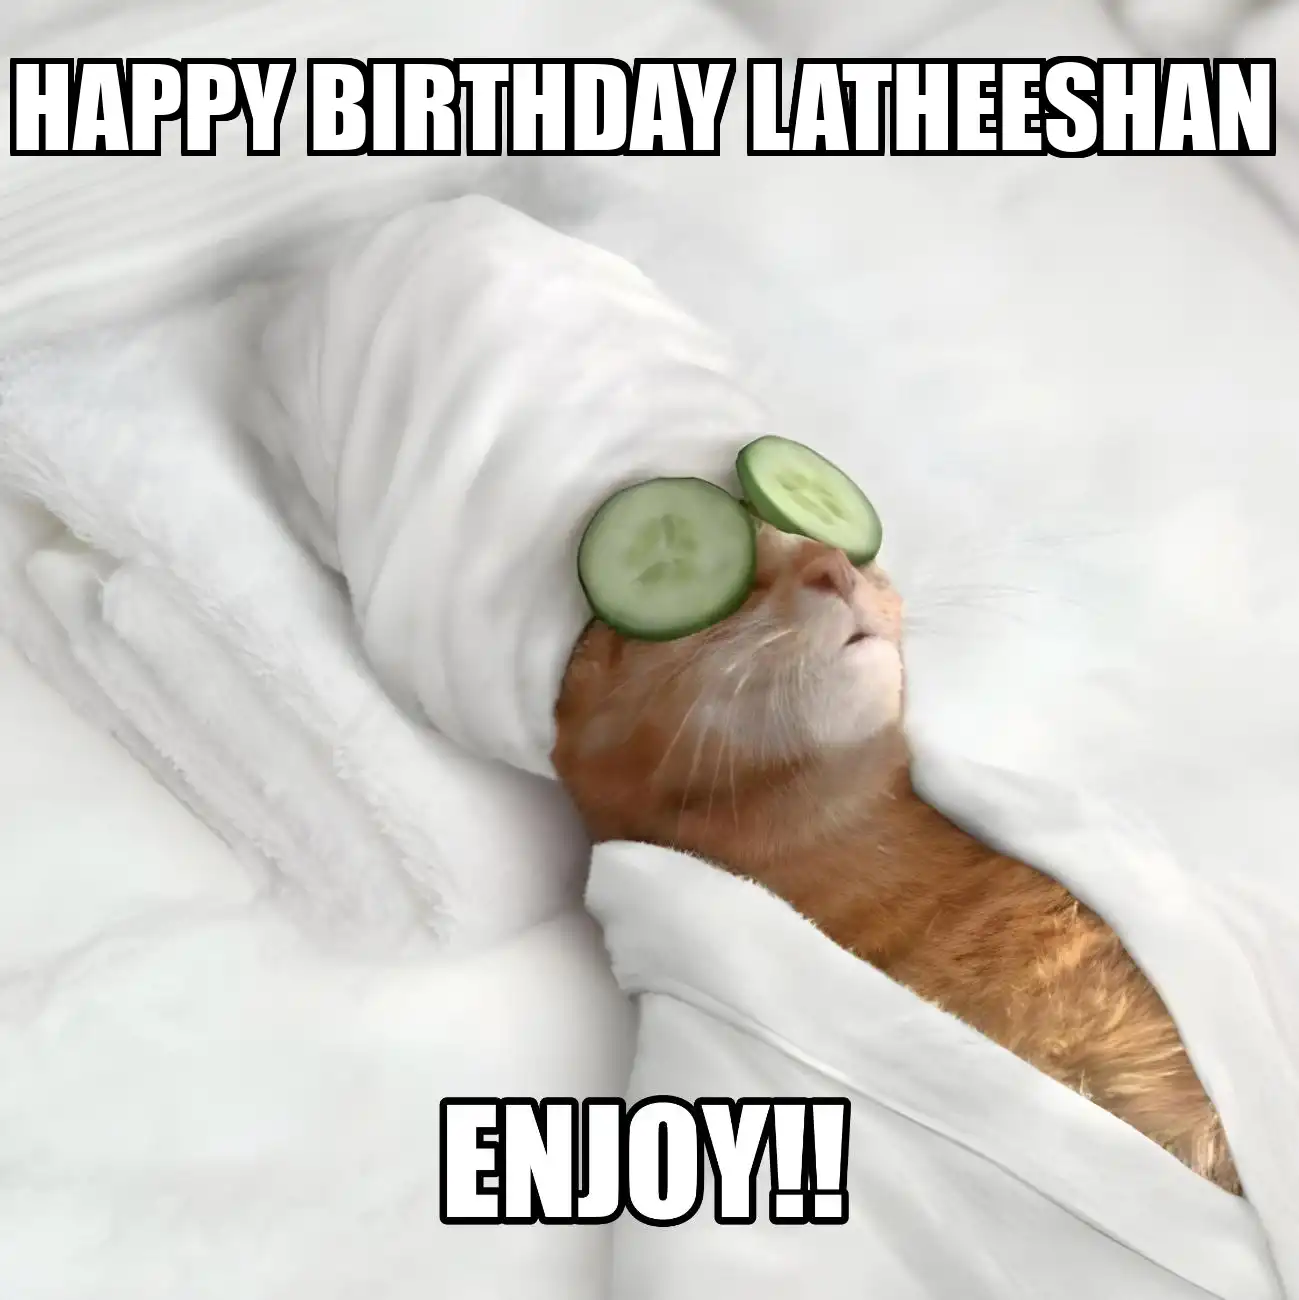 Happy Birthday Latheeshan Enjoy Cat Meme